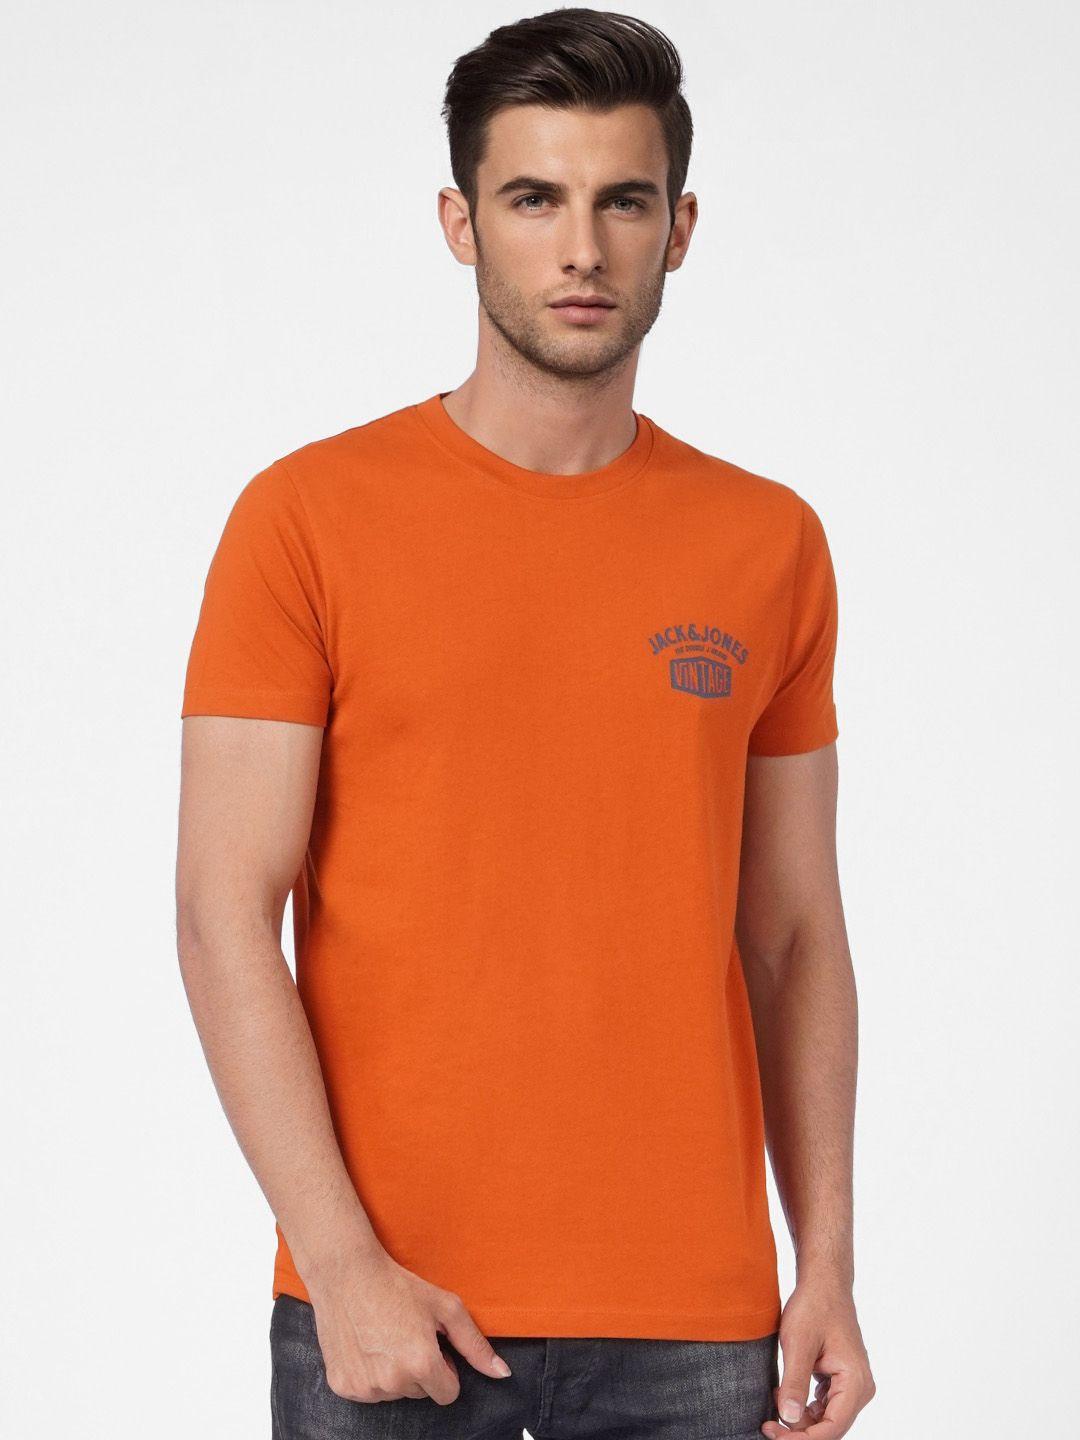 jack & jones men orange & grey brand logo printed pure cotton slim fit t-shirt